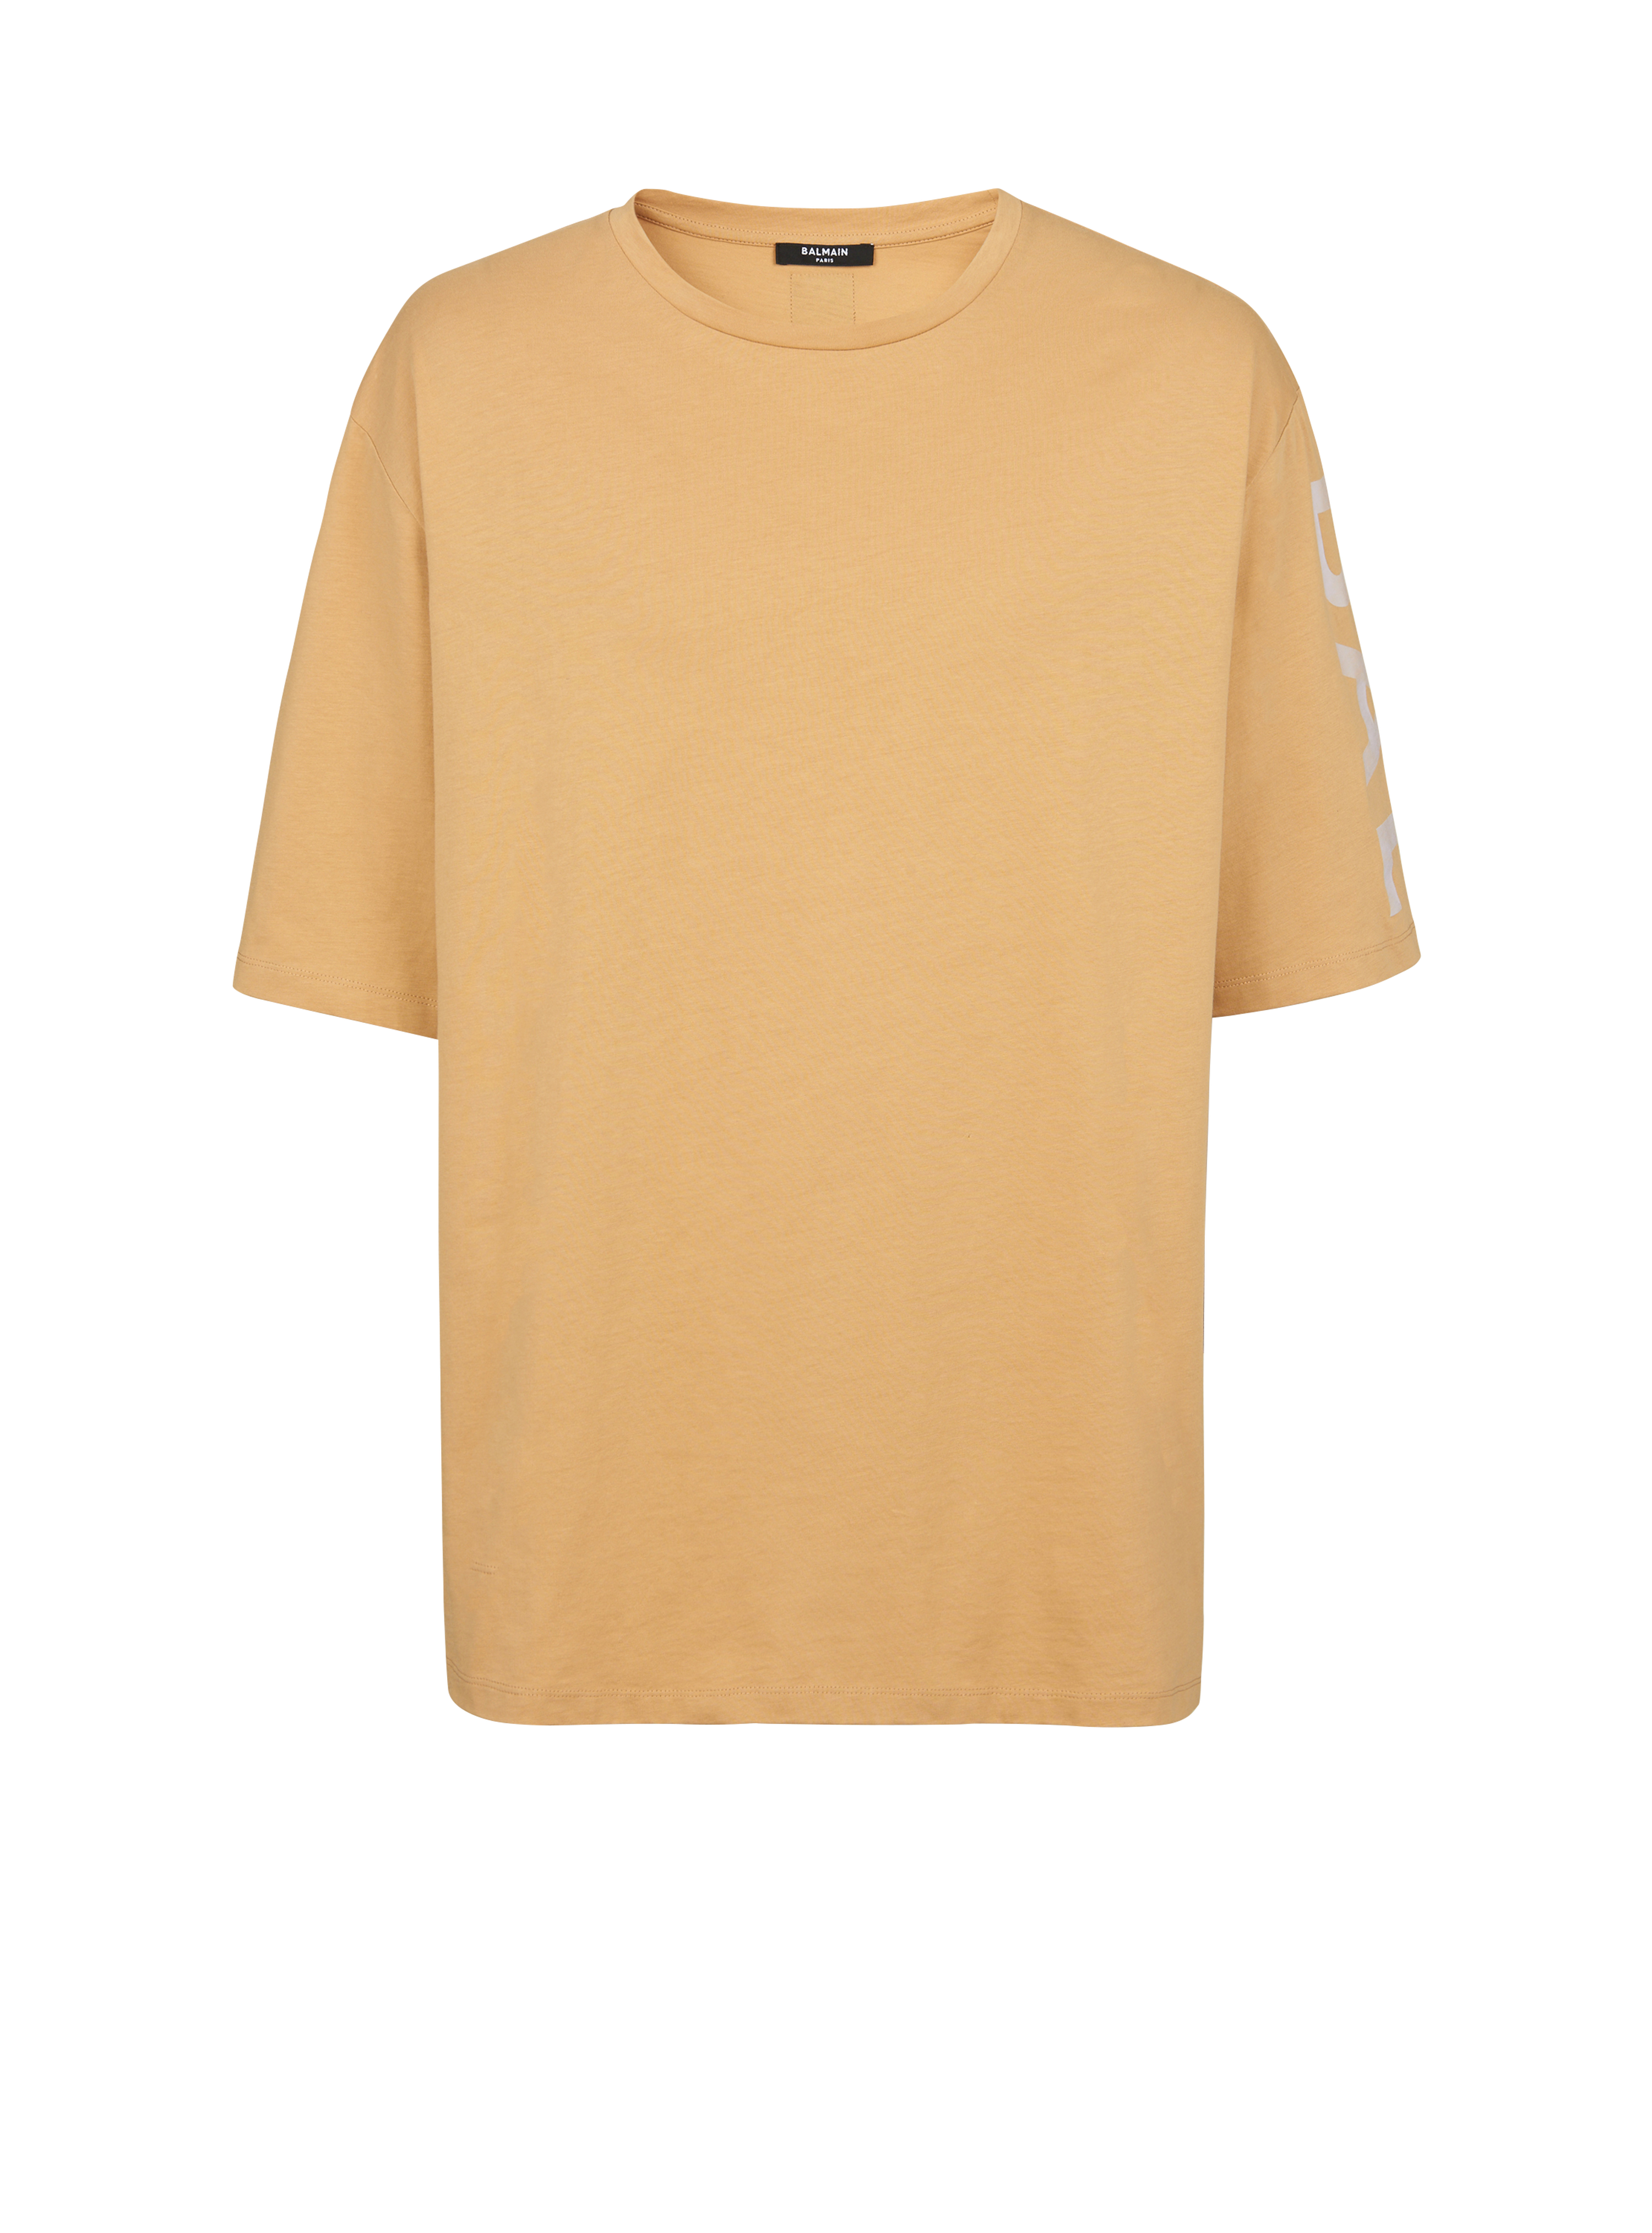 Oversized cotton T-shirt with Balmain logo, brown